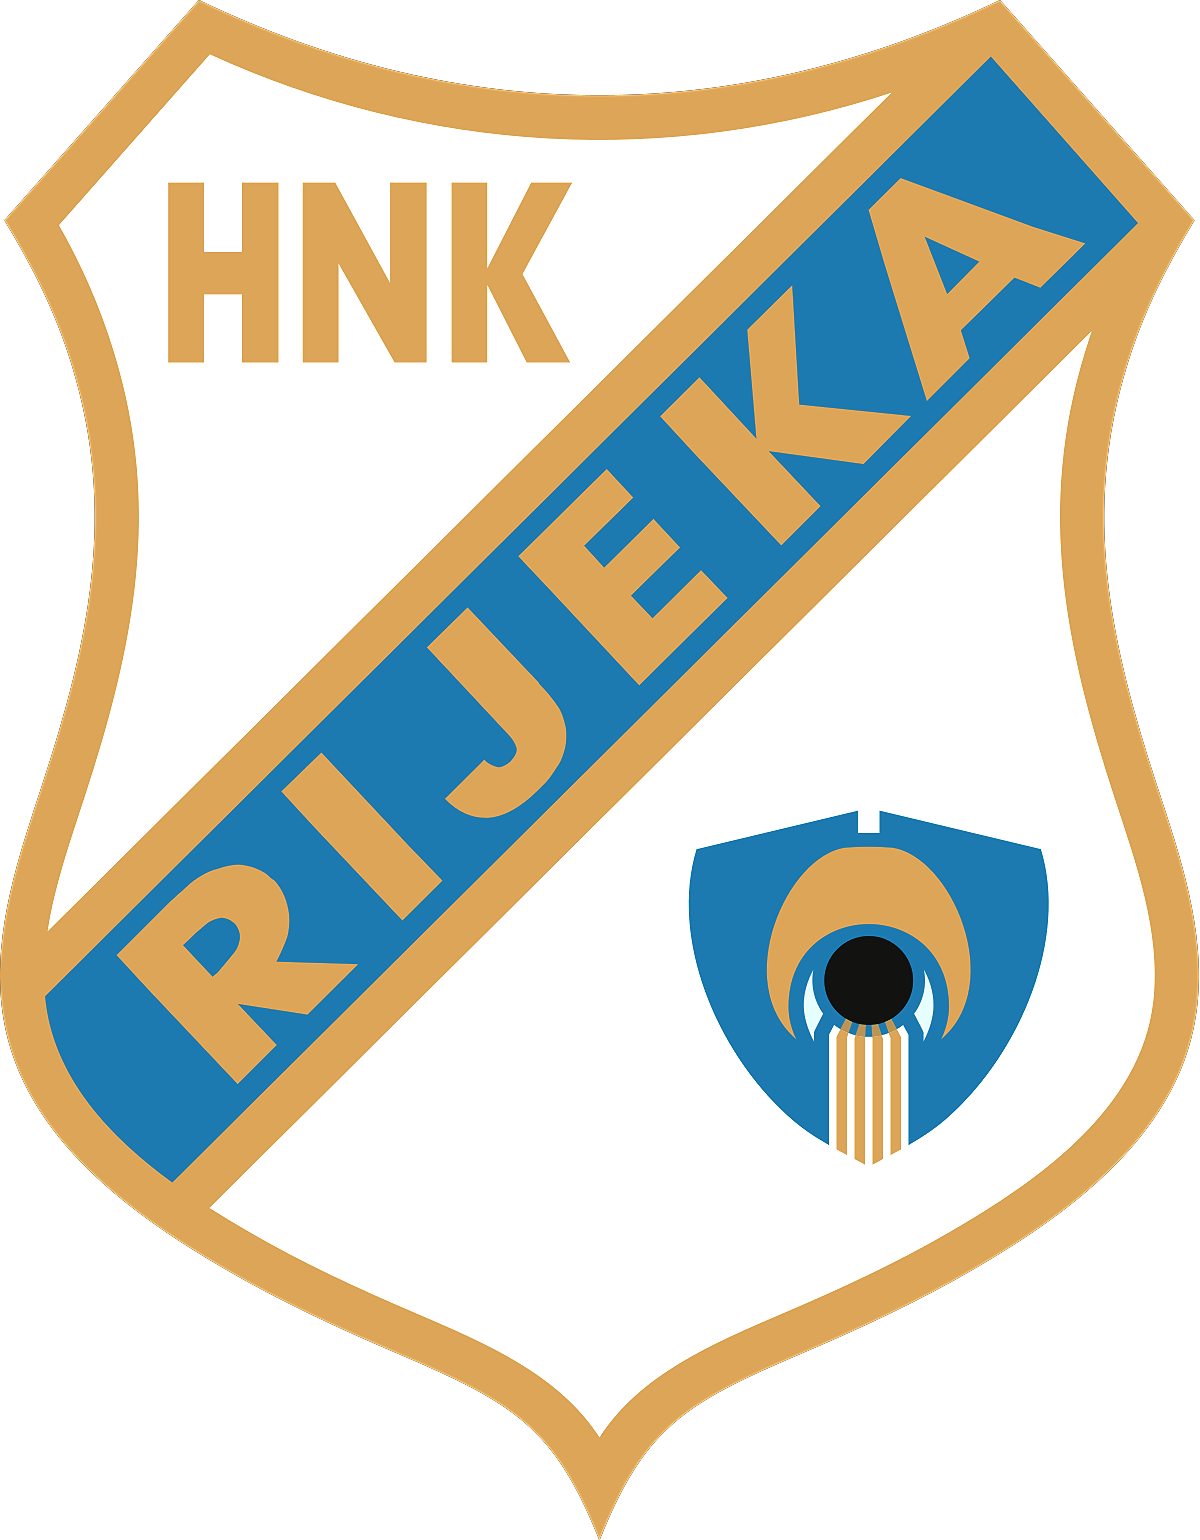 HNK Gorica doznala termin zaostale utakmice protiv Rijeke